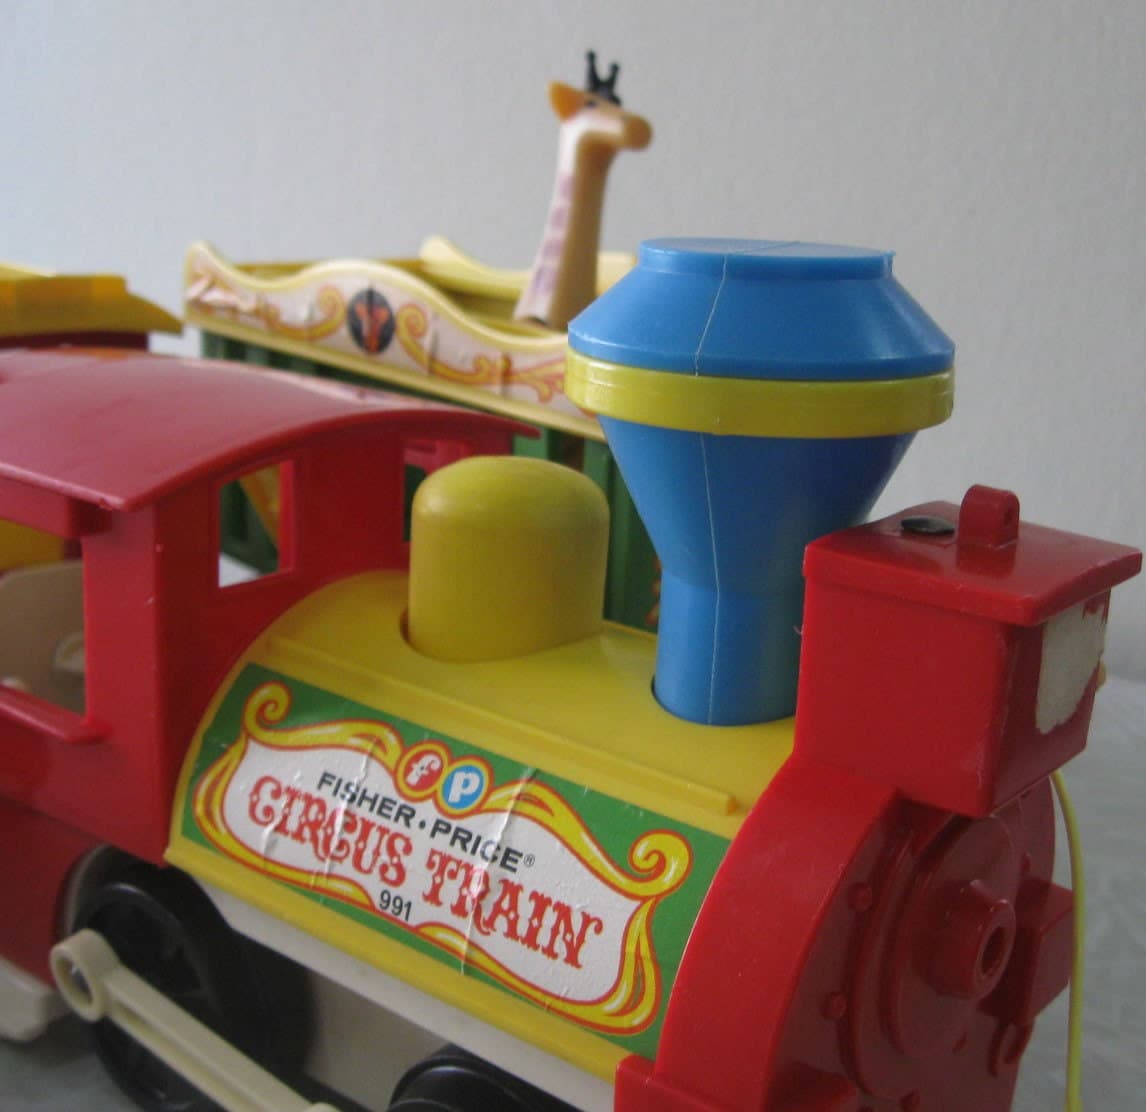 Fisher Price Circus Train set 991 pull toy set